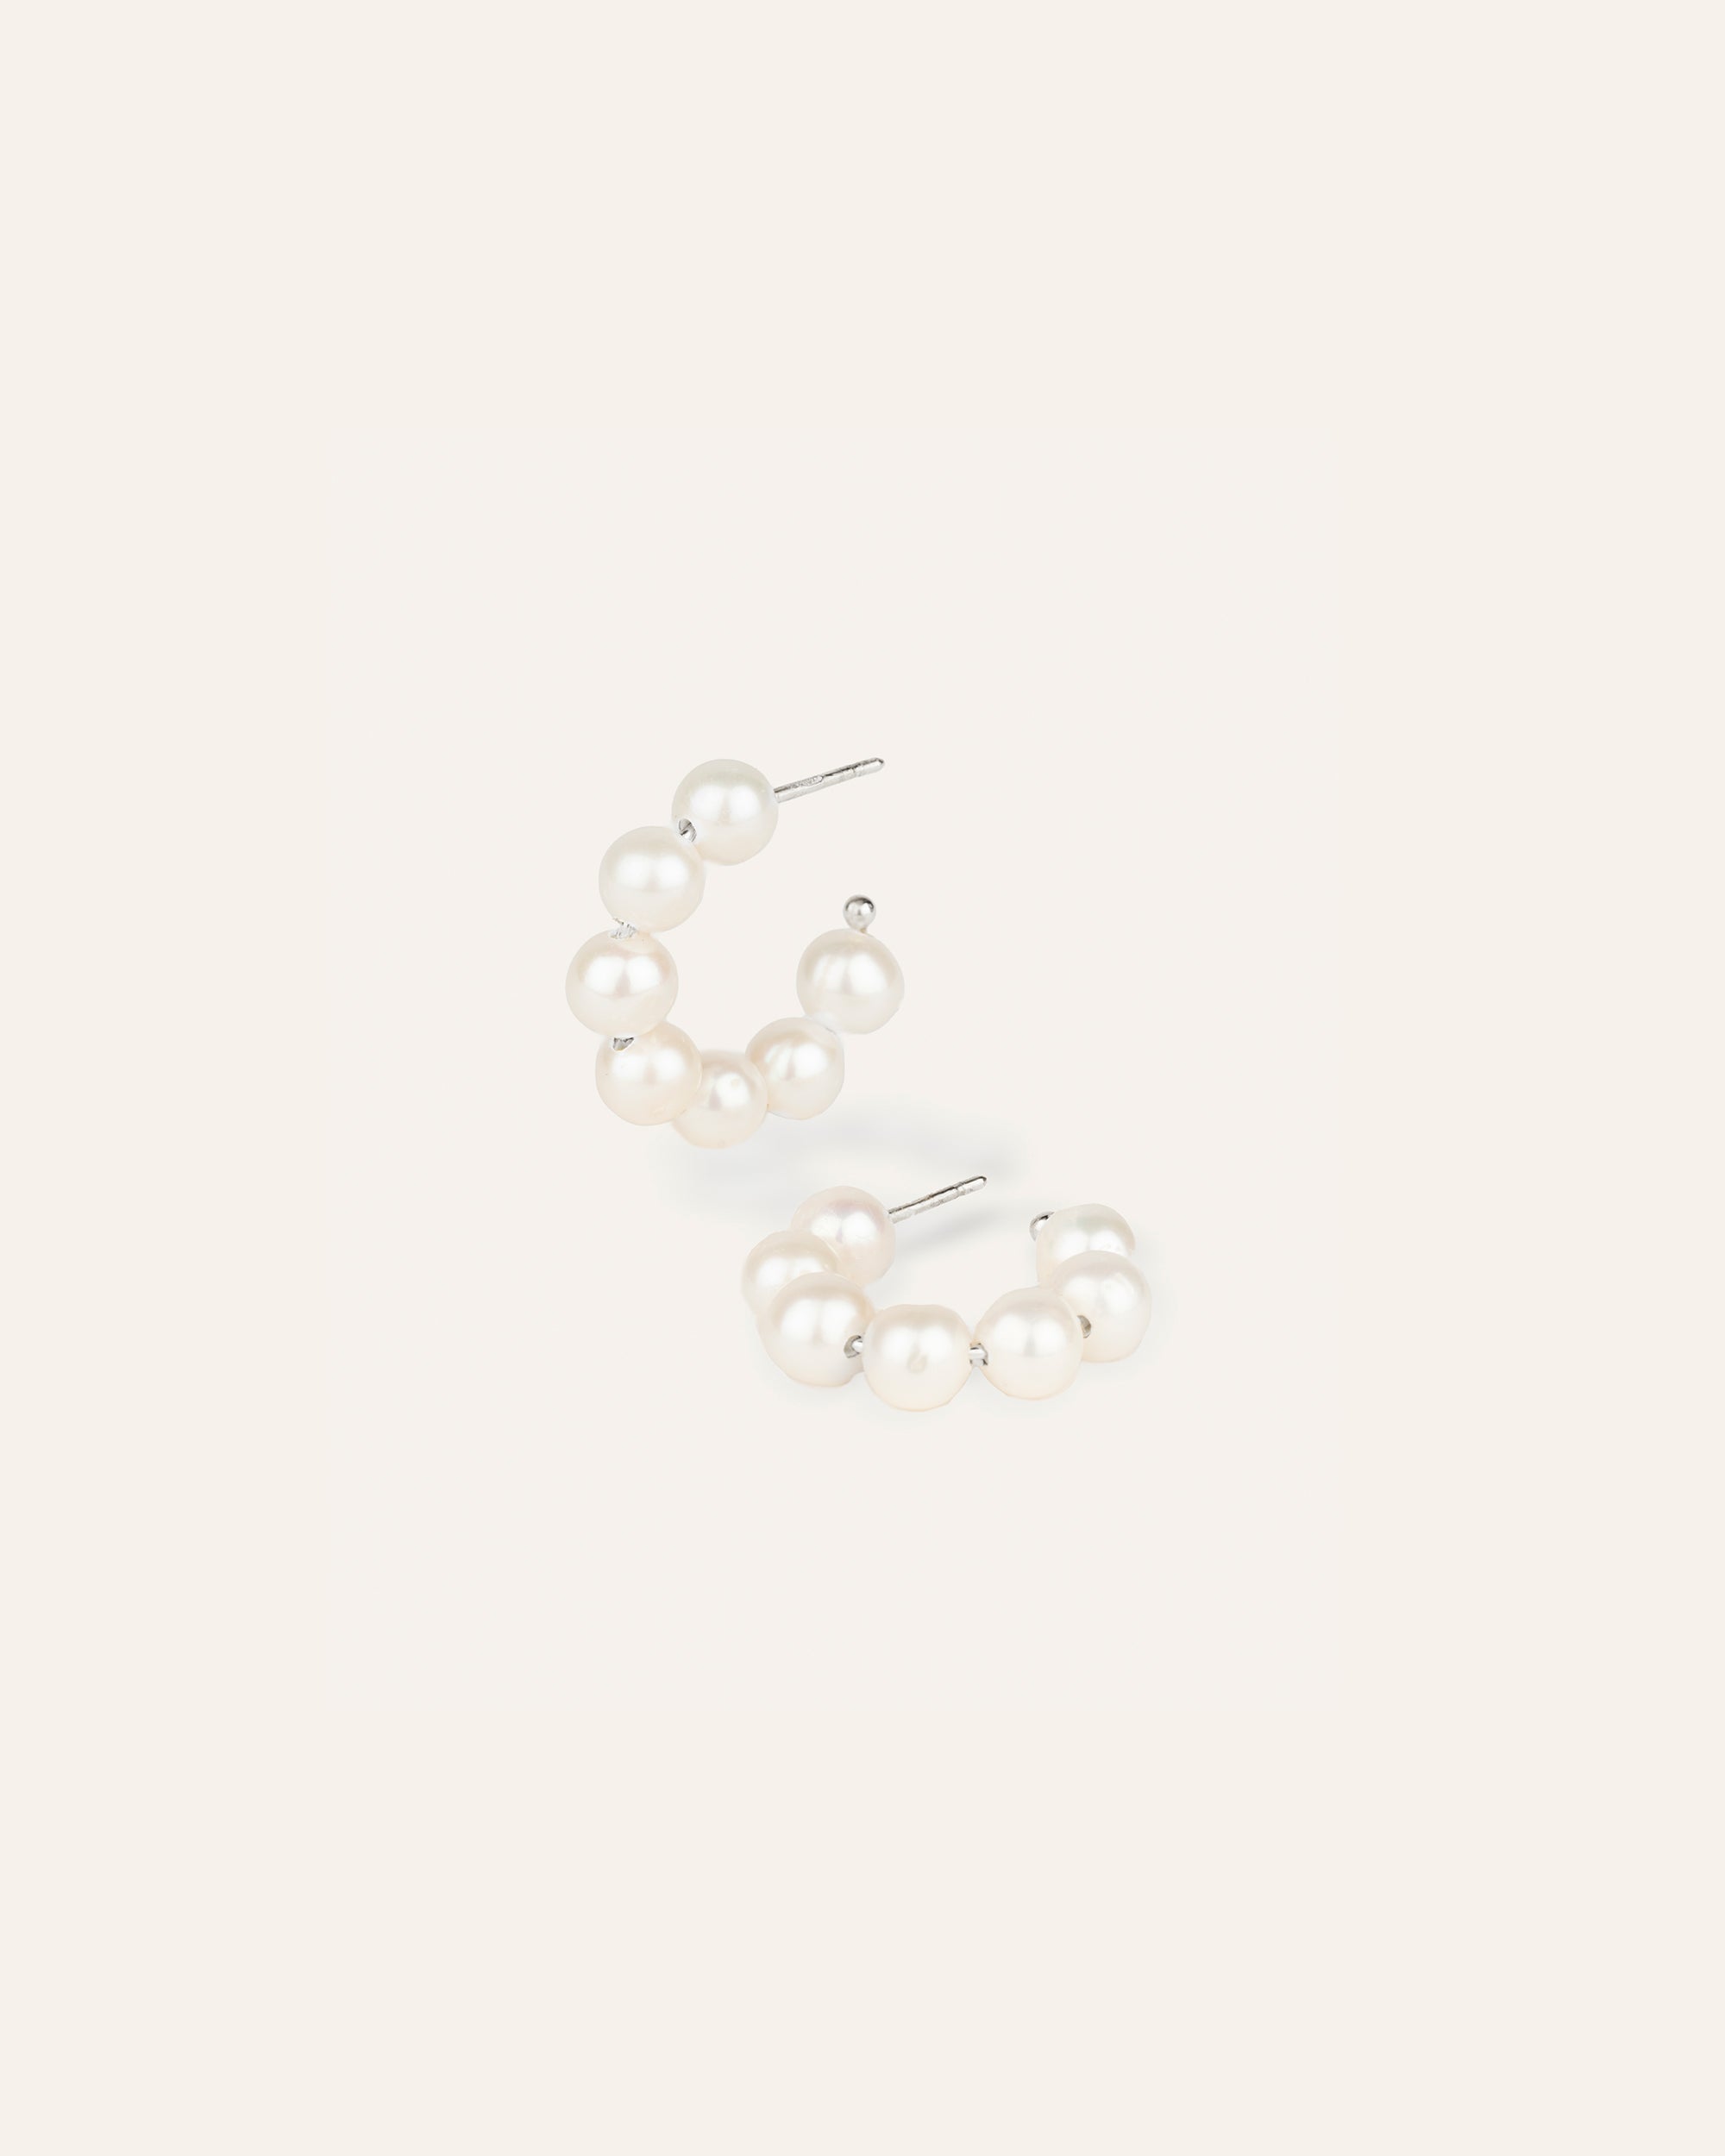 Créoles associées de perles de culture en argent massif 925 made in France.